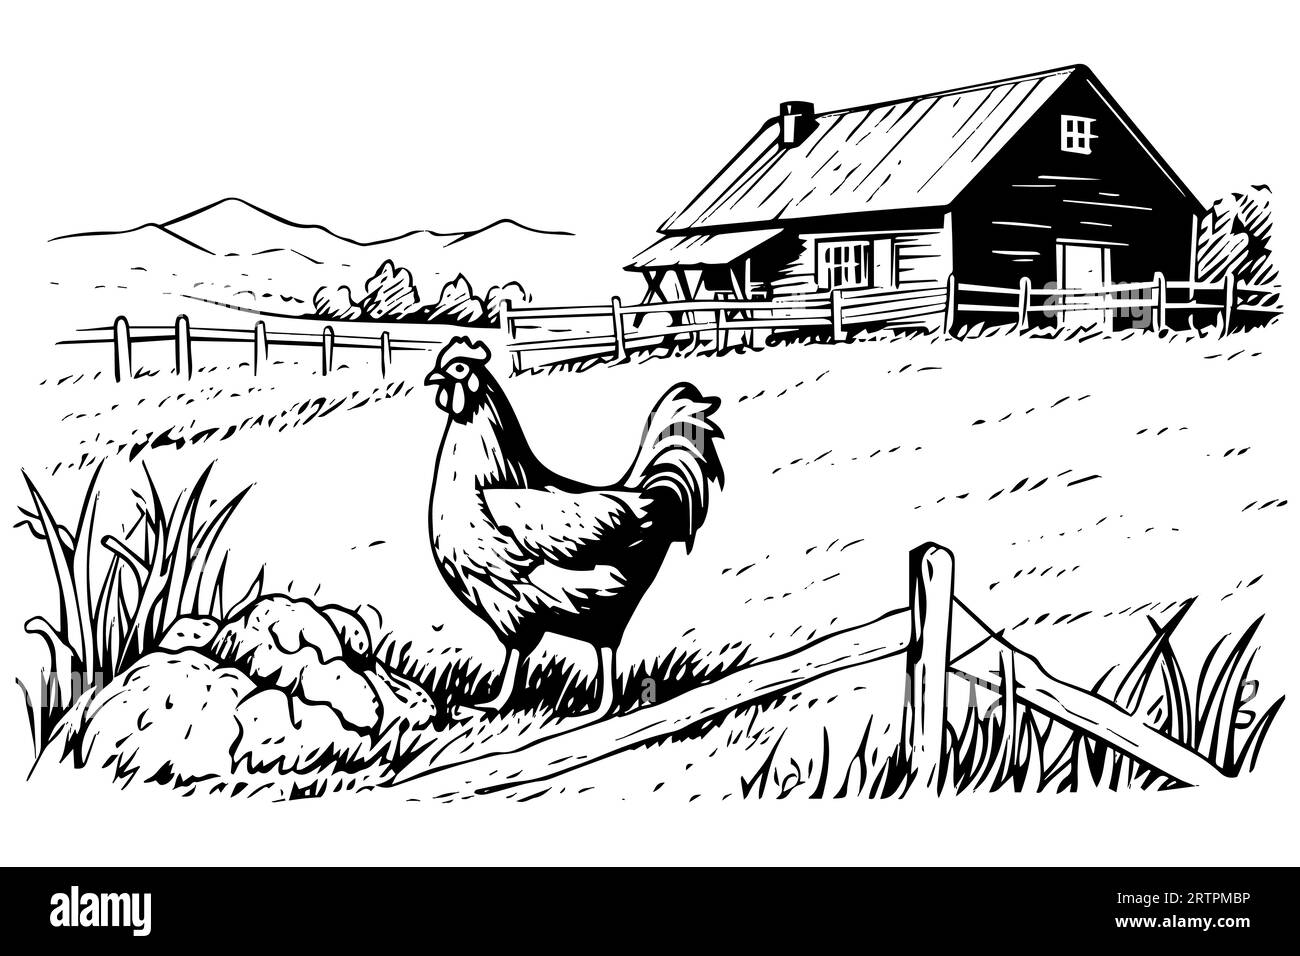 Chickens in farm sketch. Rural landscape in vintage engraving style vector illustration. Stock Vector